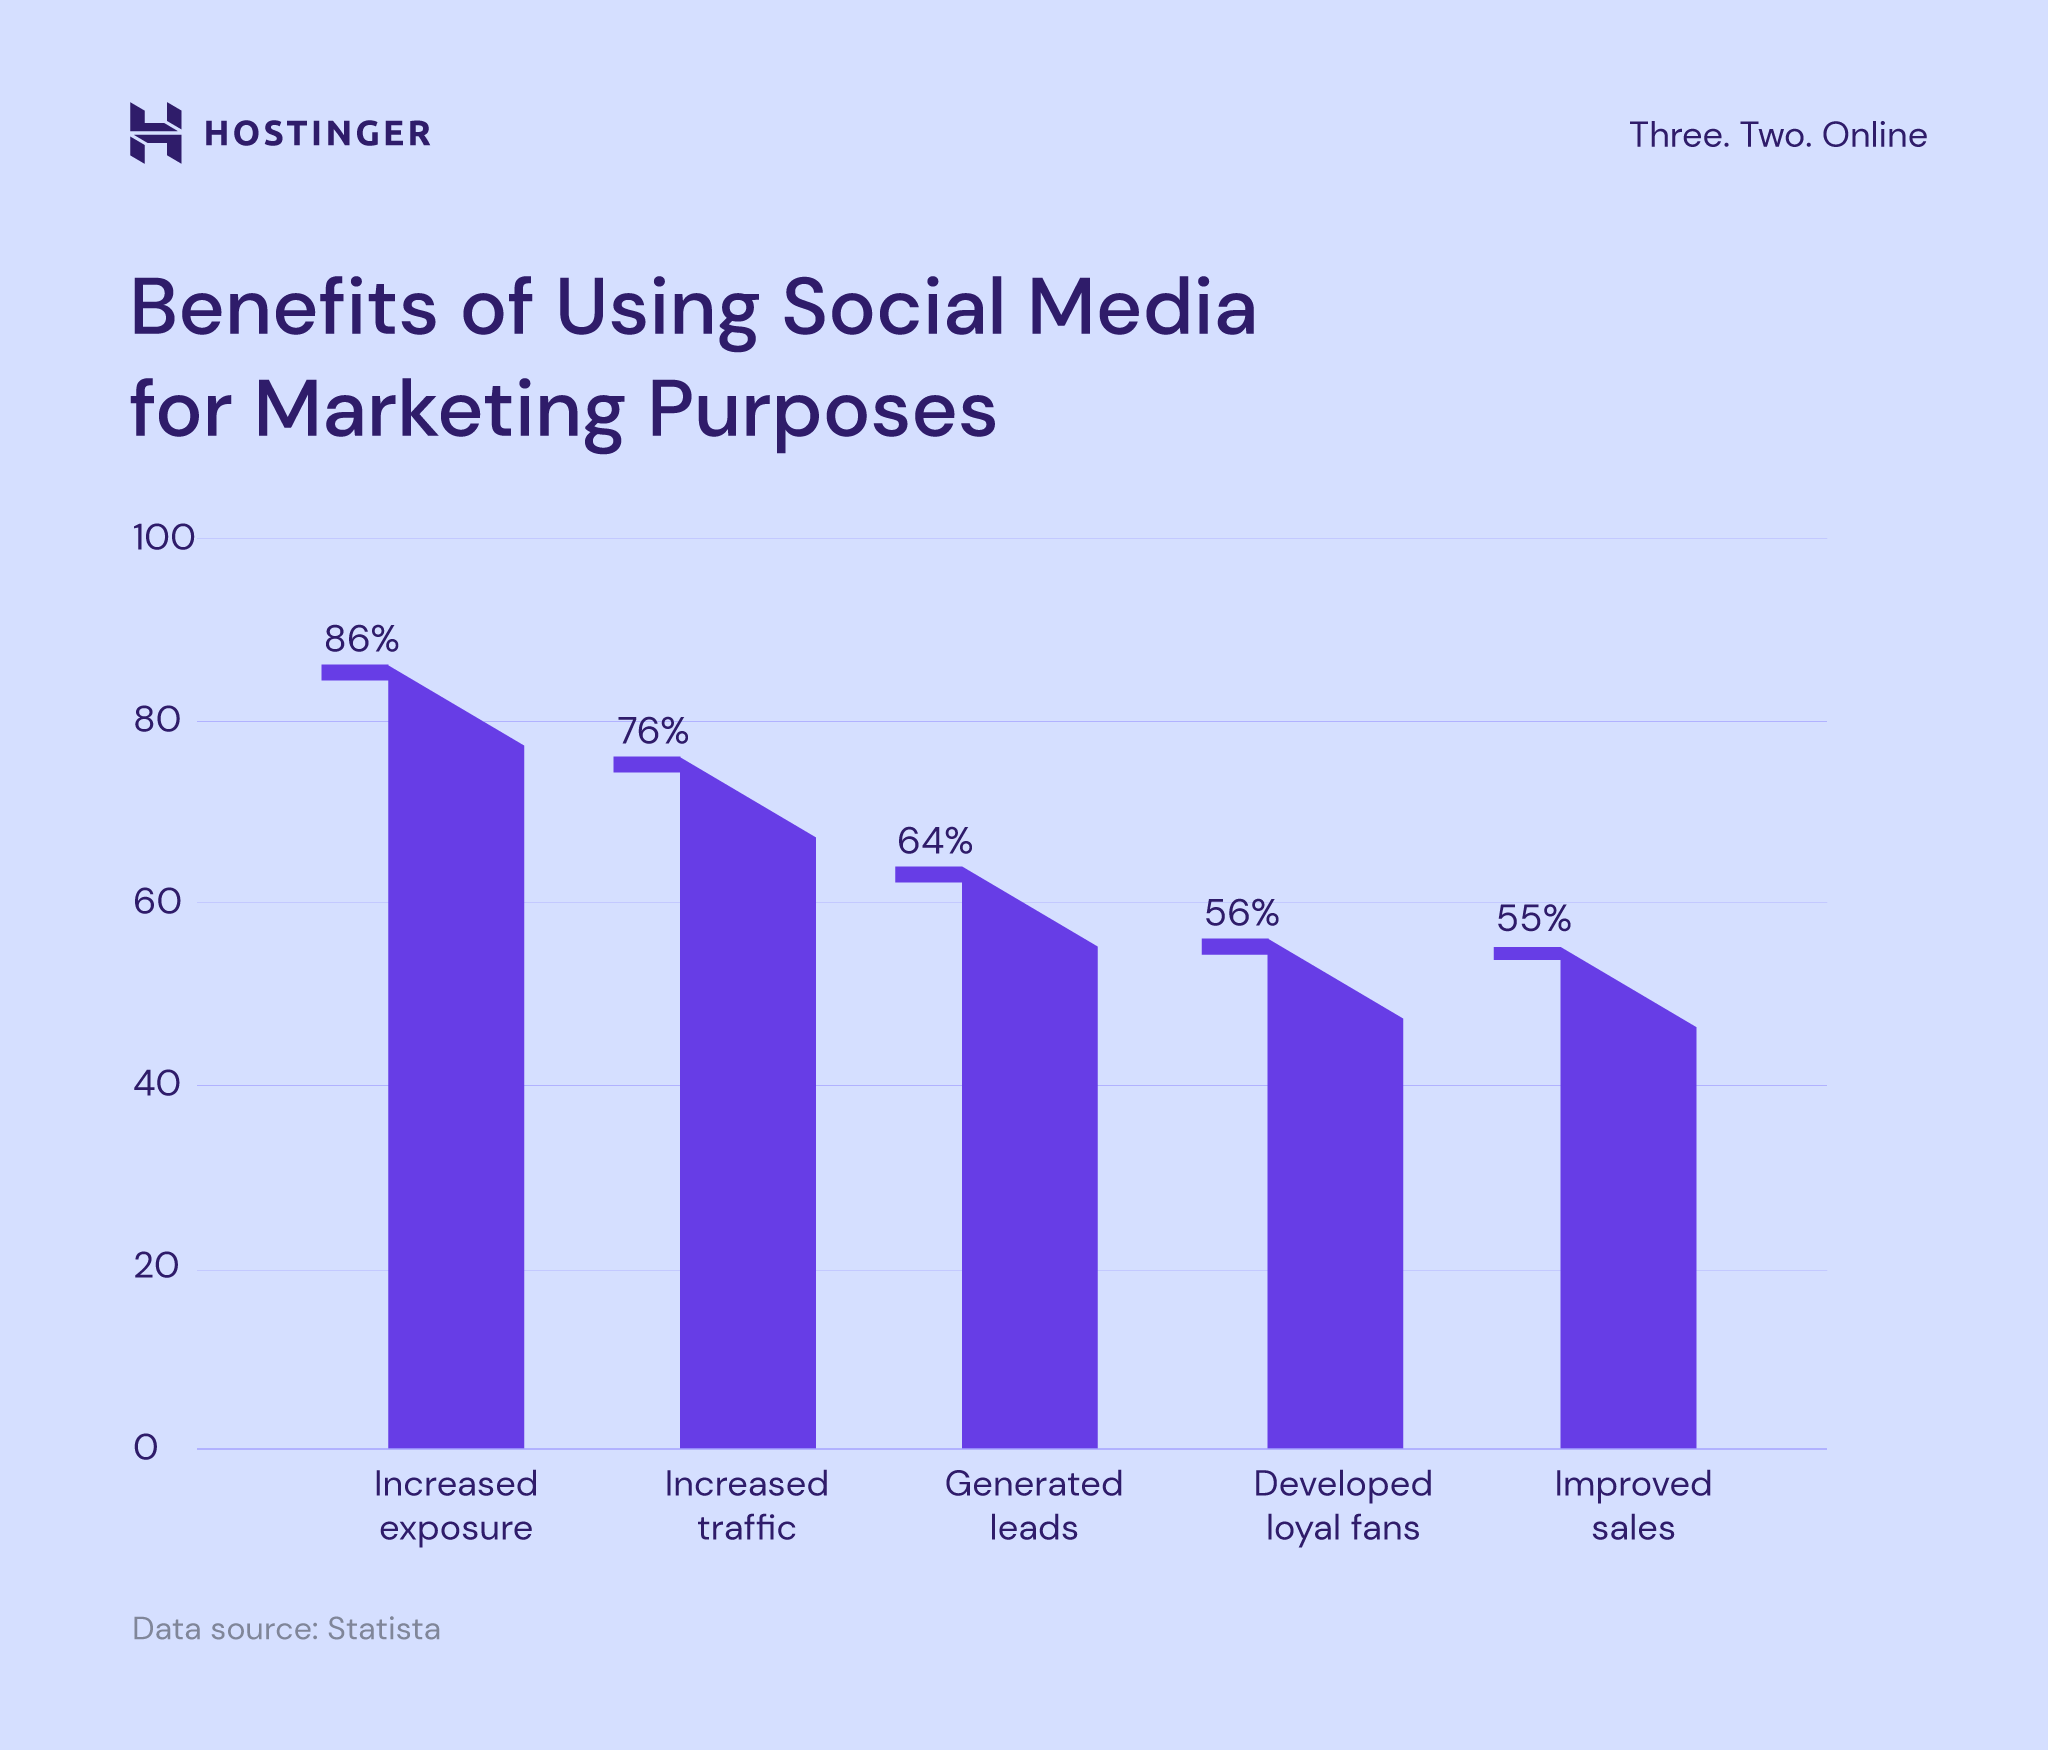 Benefits of using social media for marketing purposes
